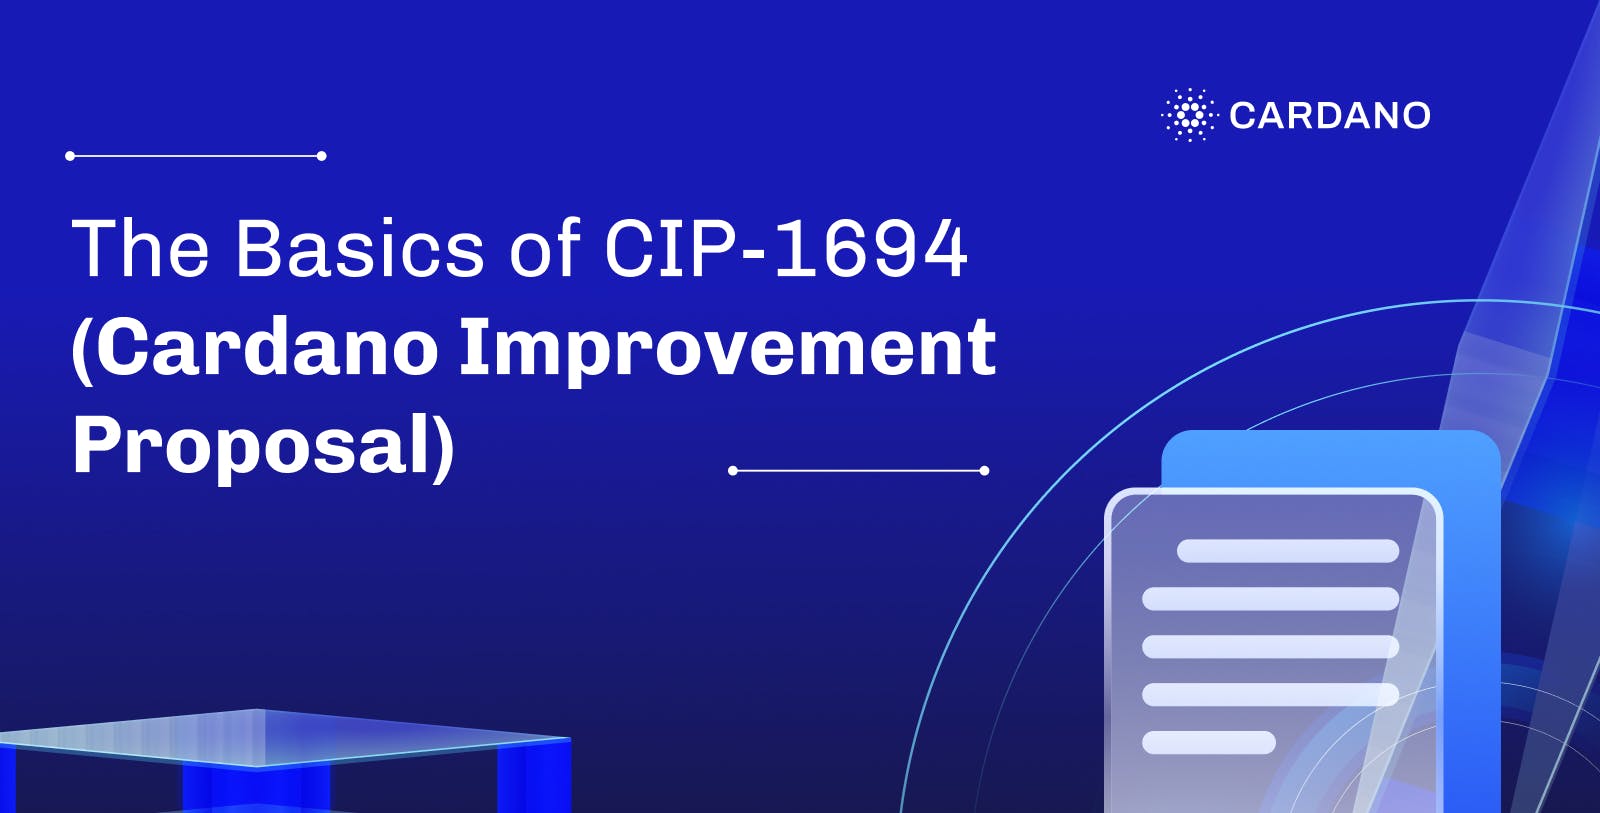 The-Basics-of-CIP-1694-Cardano-Improvement-Proposal2023.jpg